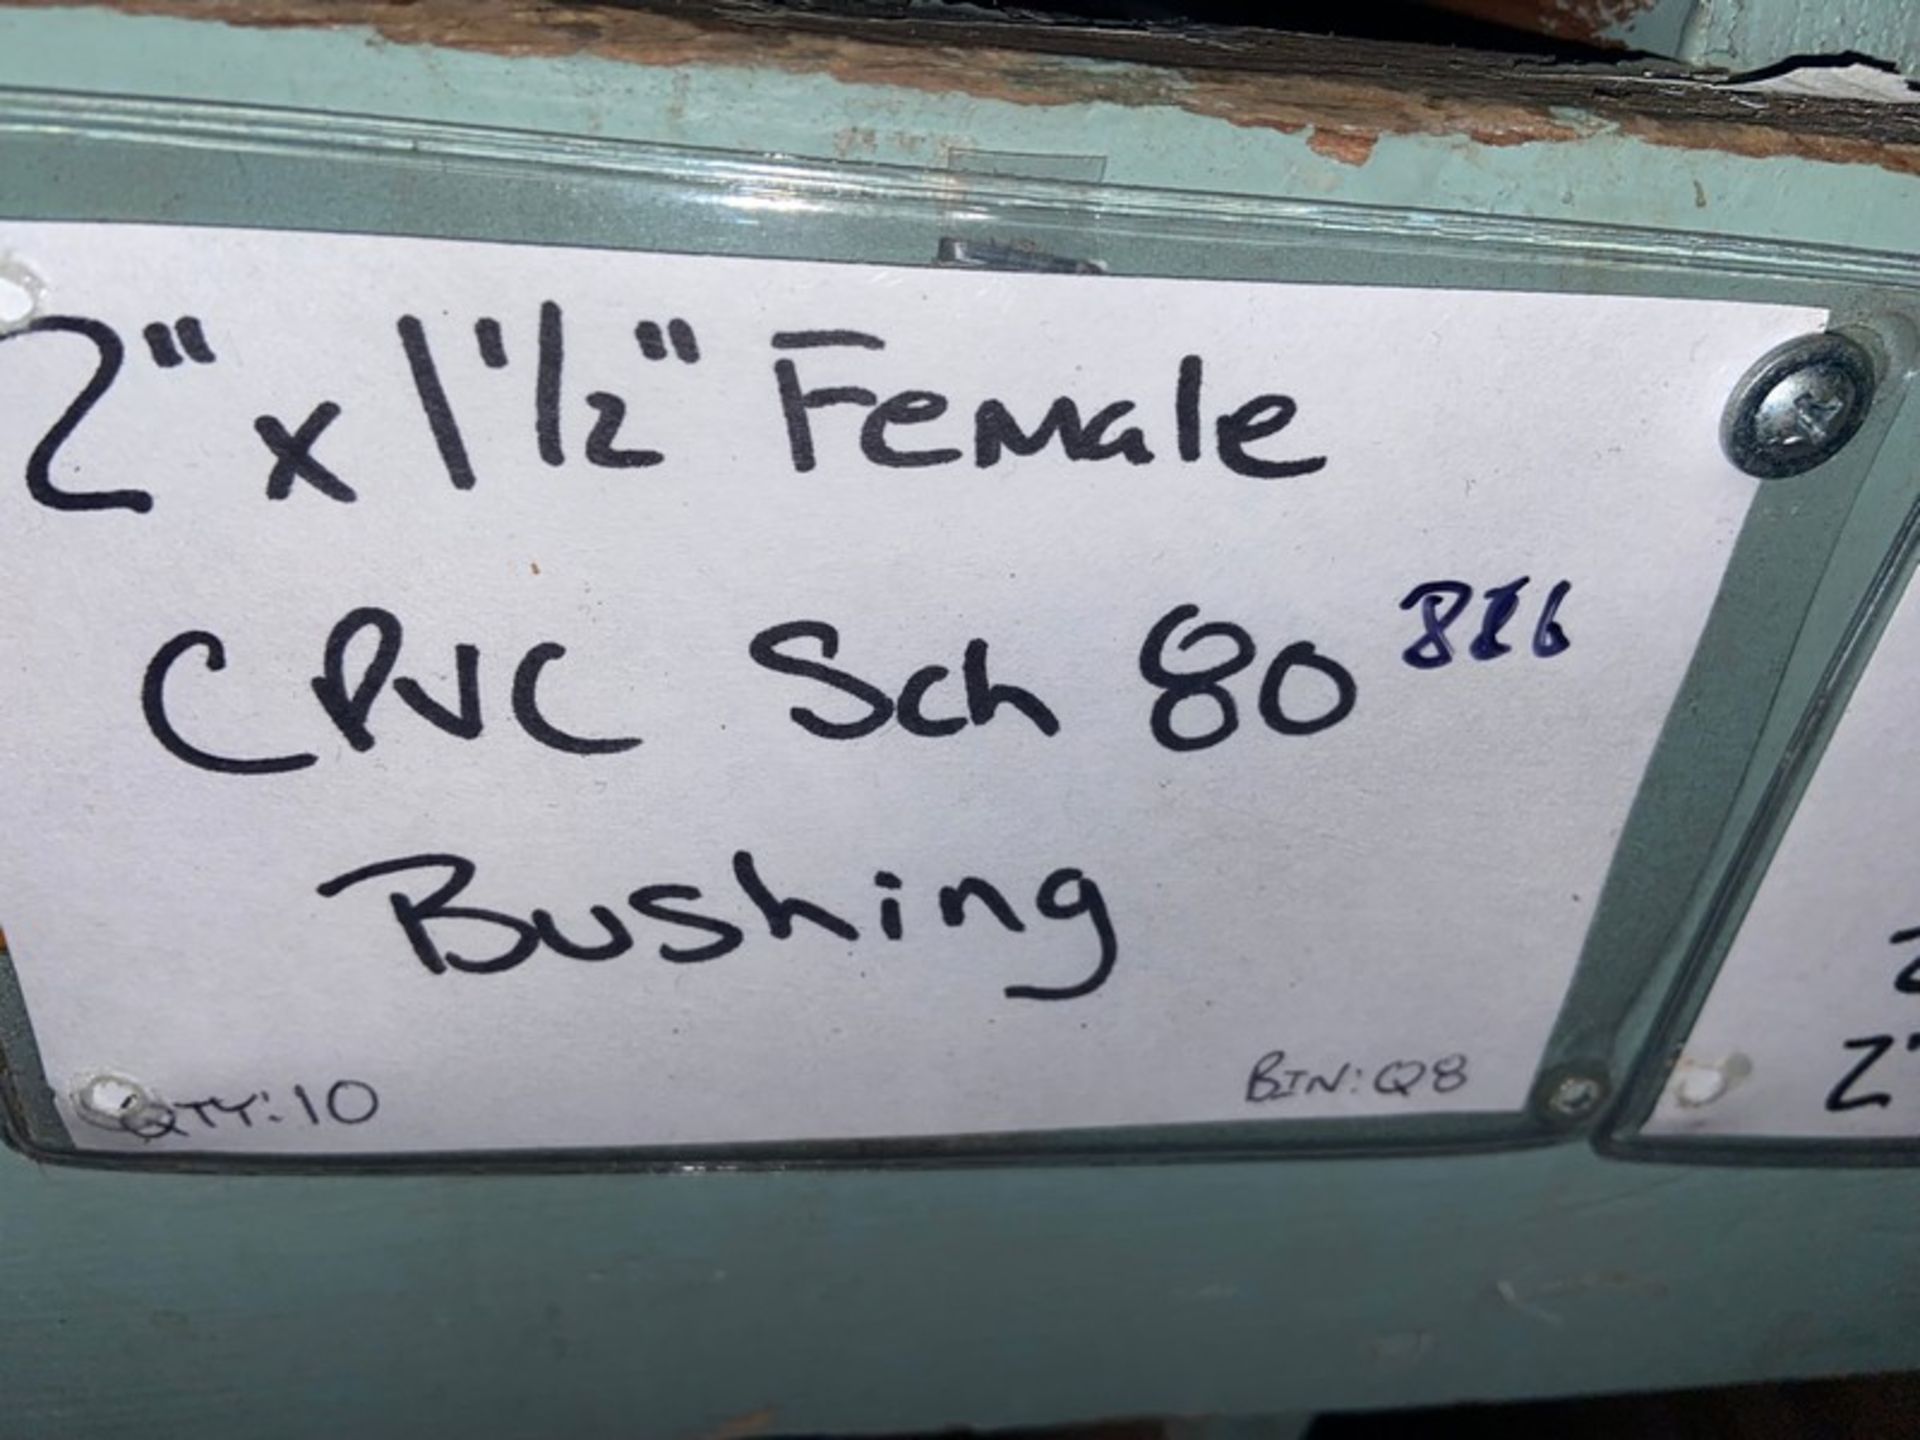 (18) 2”x1 1/2” Female CPVC Sch 80 Bushing(Bin:Q8) (LOCATED IN MONROEVILLE, PA) - Image 6 of 8